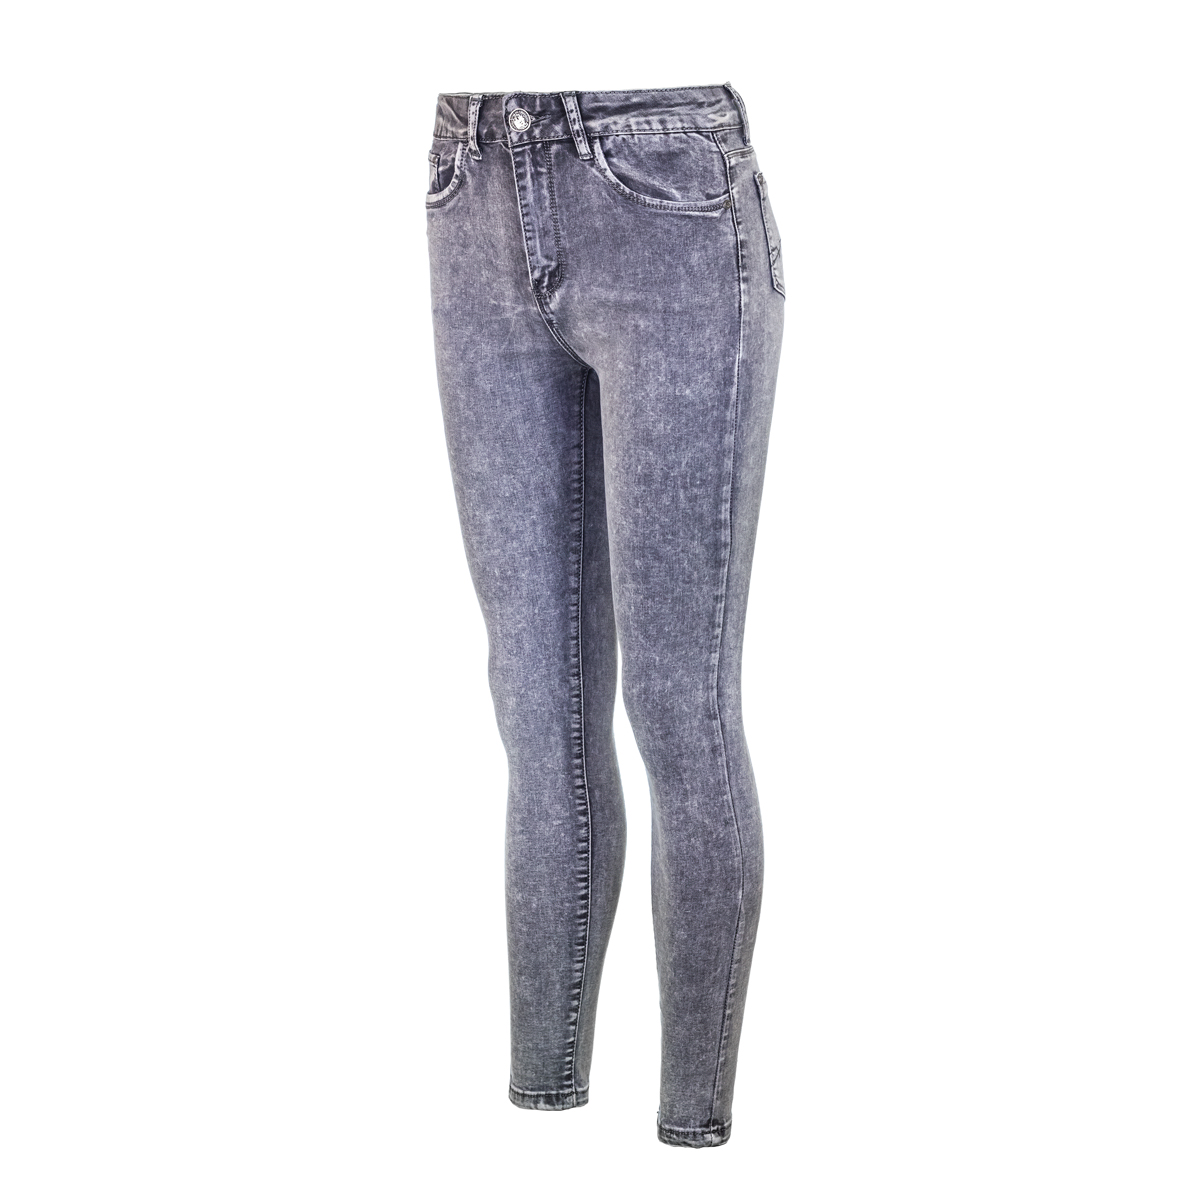 Жен. джинсы арт. 12-0087 Серый р. 29 -, размер 29 - фото 3